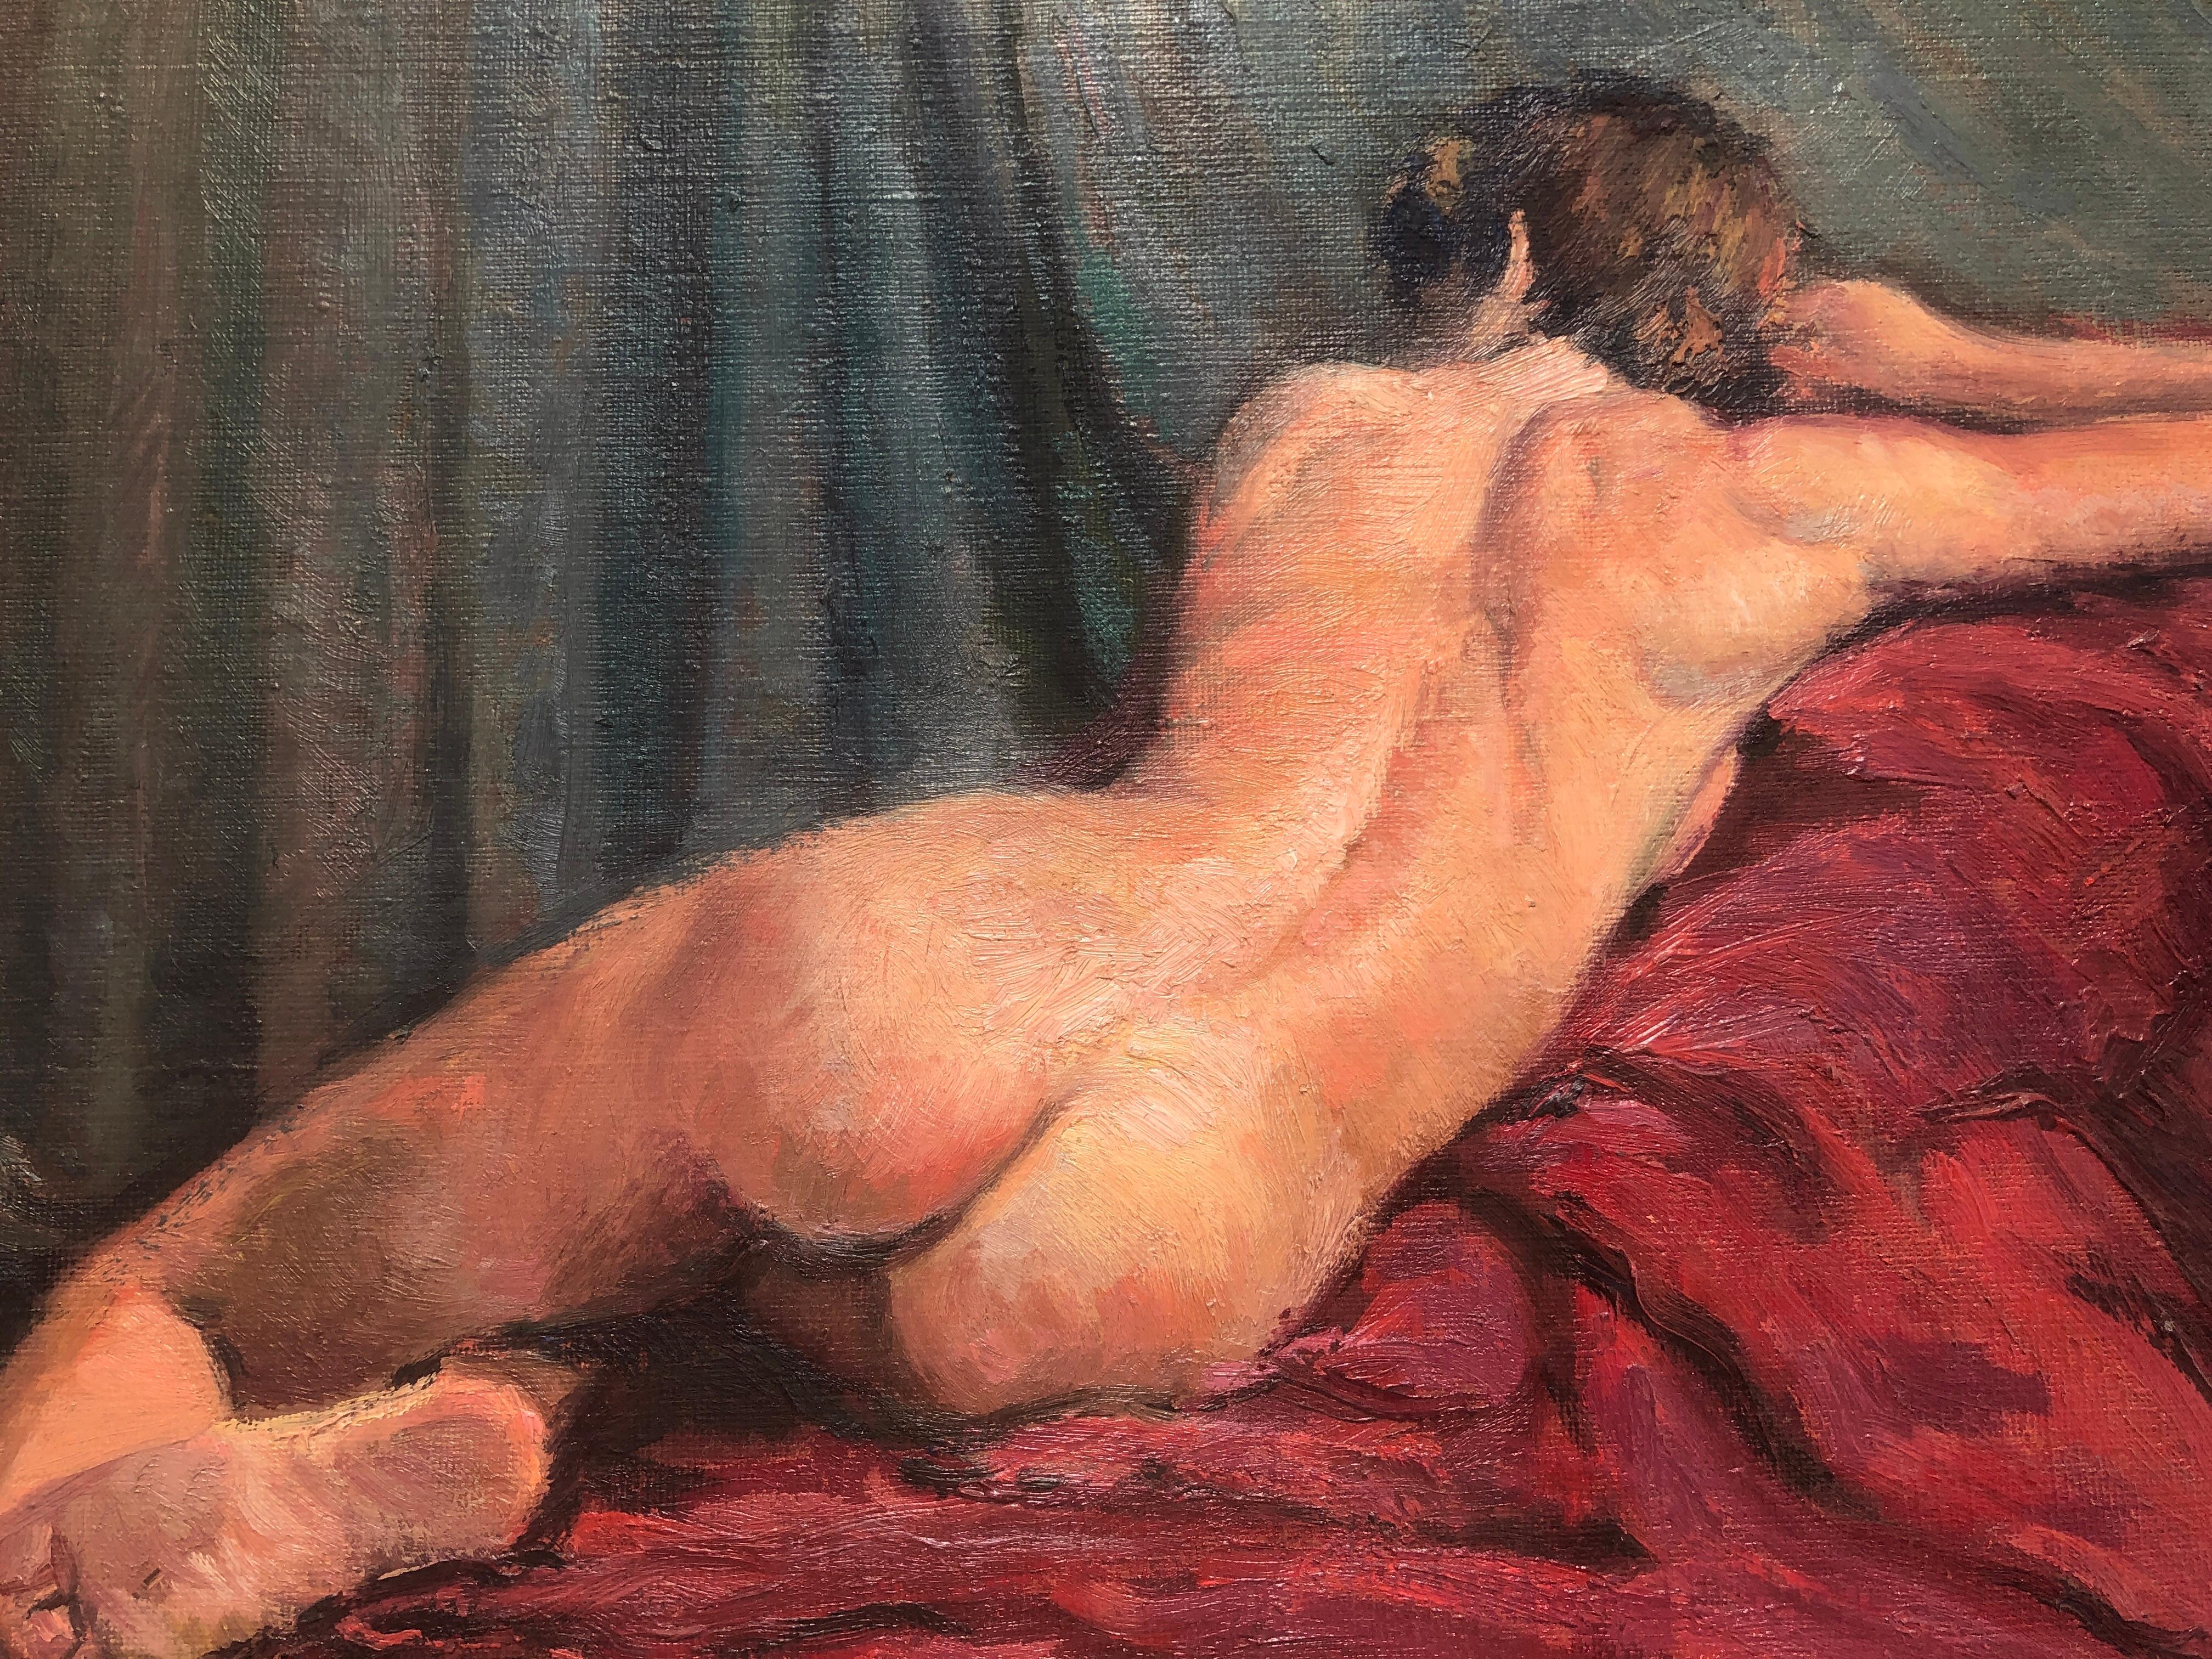 Francisco Ortiz (XX) - Female Nude - Oil on canvas
Oil measures 33x41 cm.
Frameless.